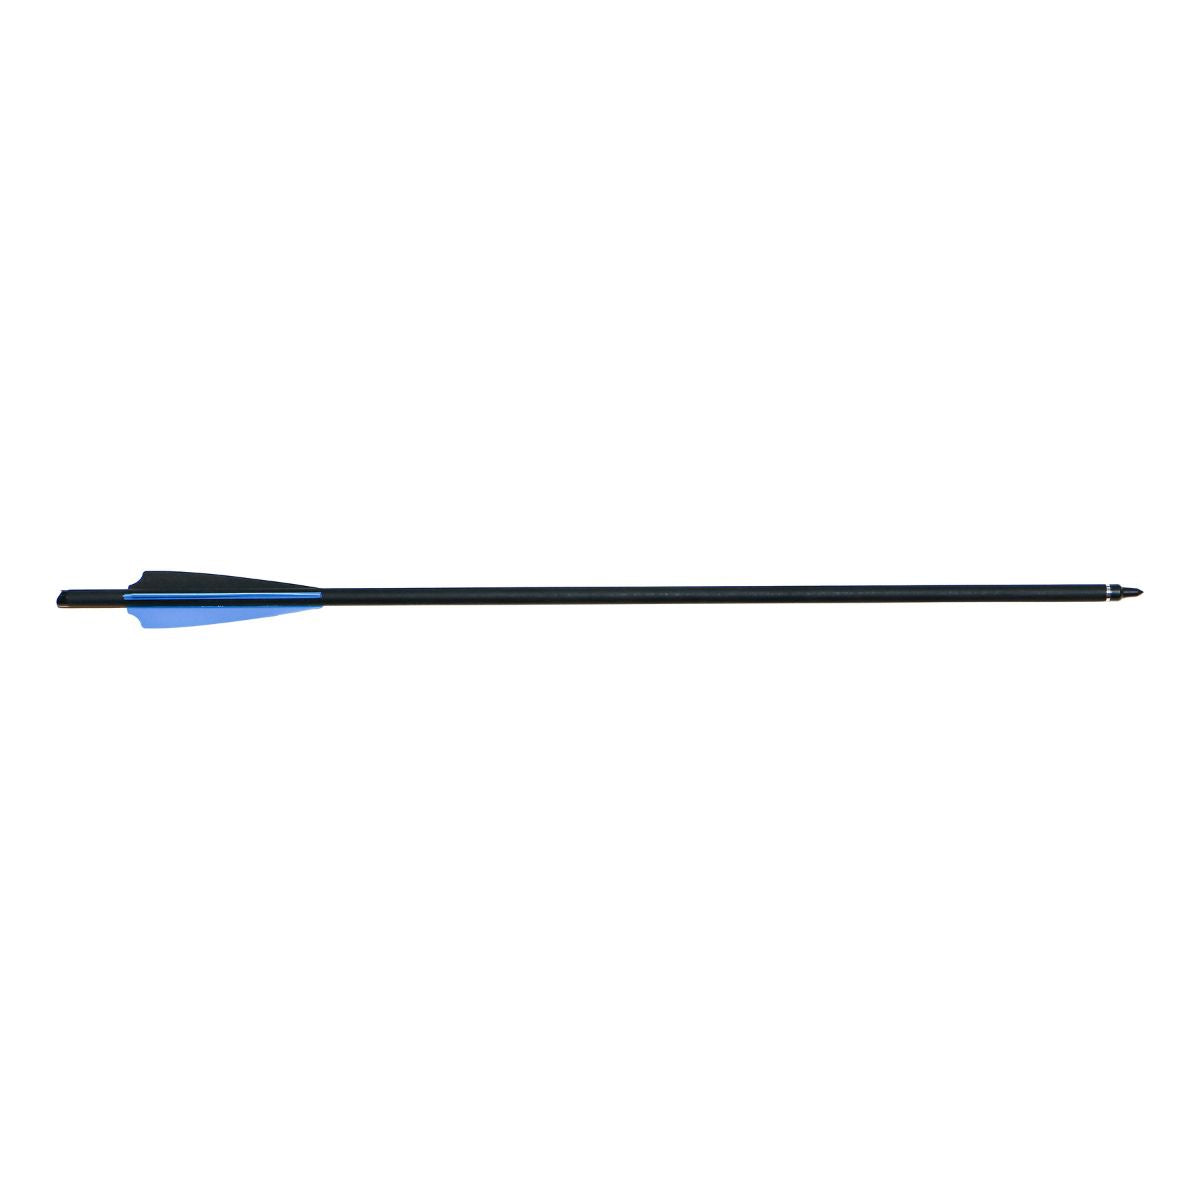 Unkind Fibre-Glass Bolt - AFGB-04 - Roll-F - Archery Equipment 1